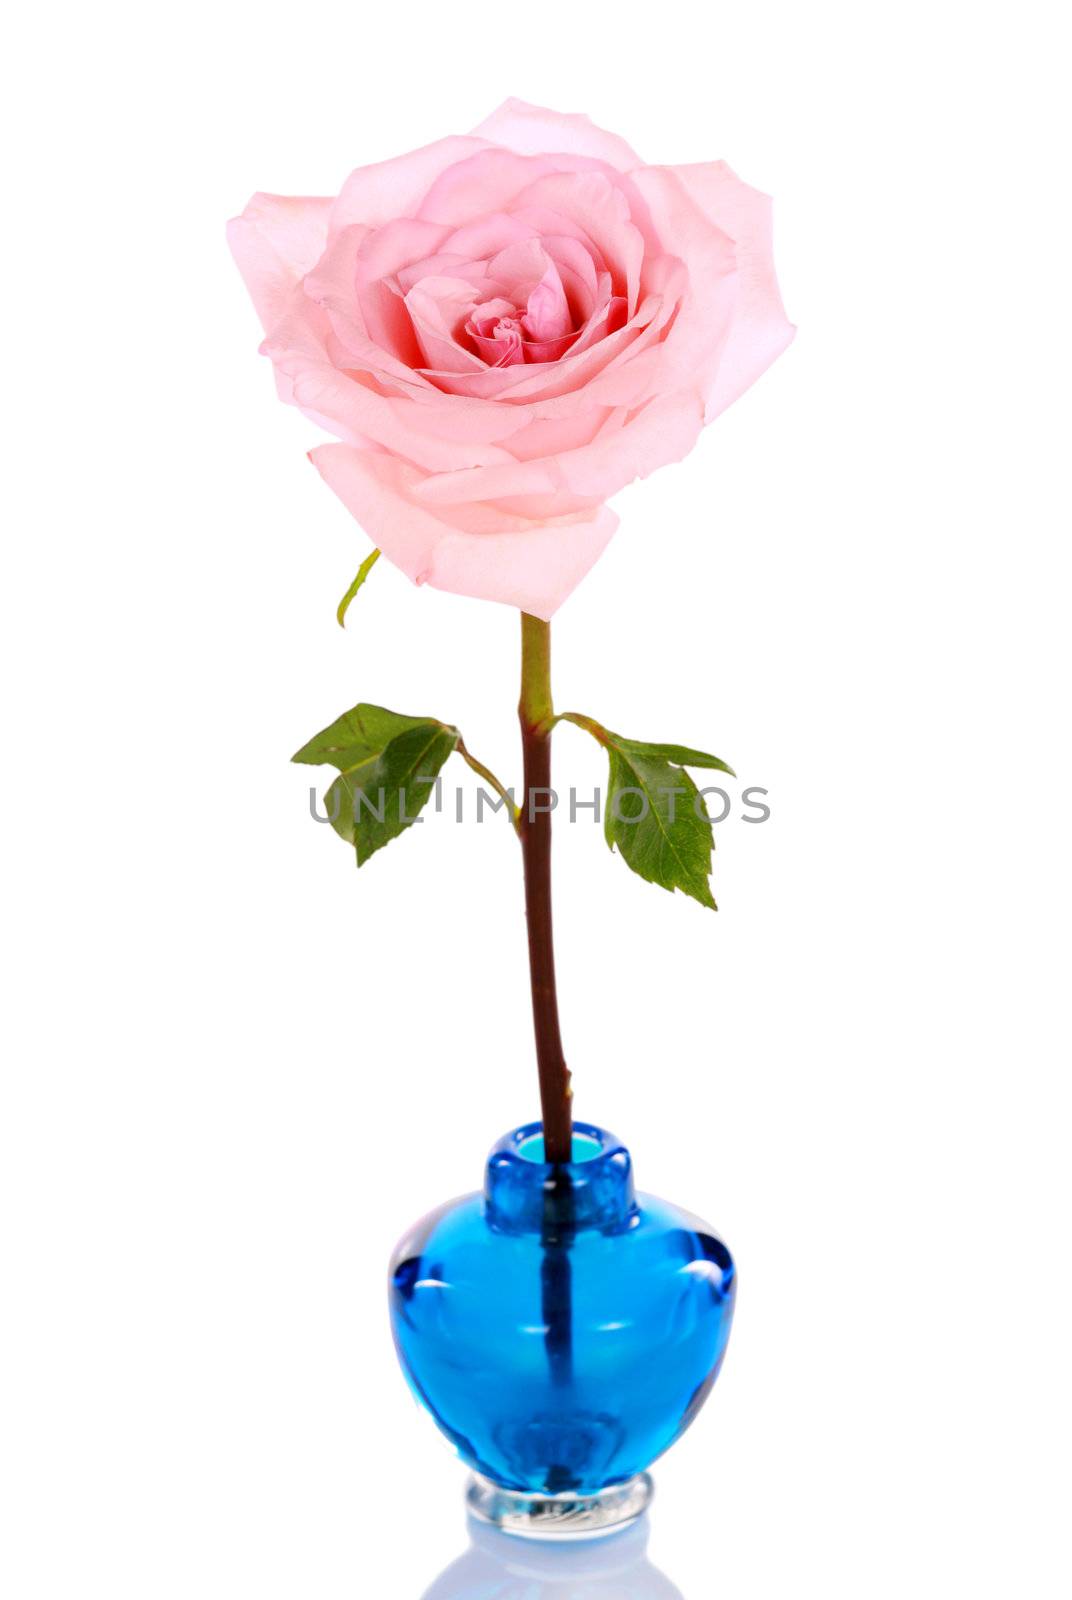 Single pink rose in blue vase by jarenwicklund